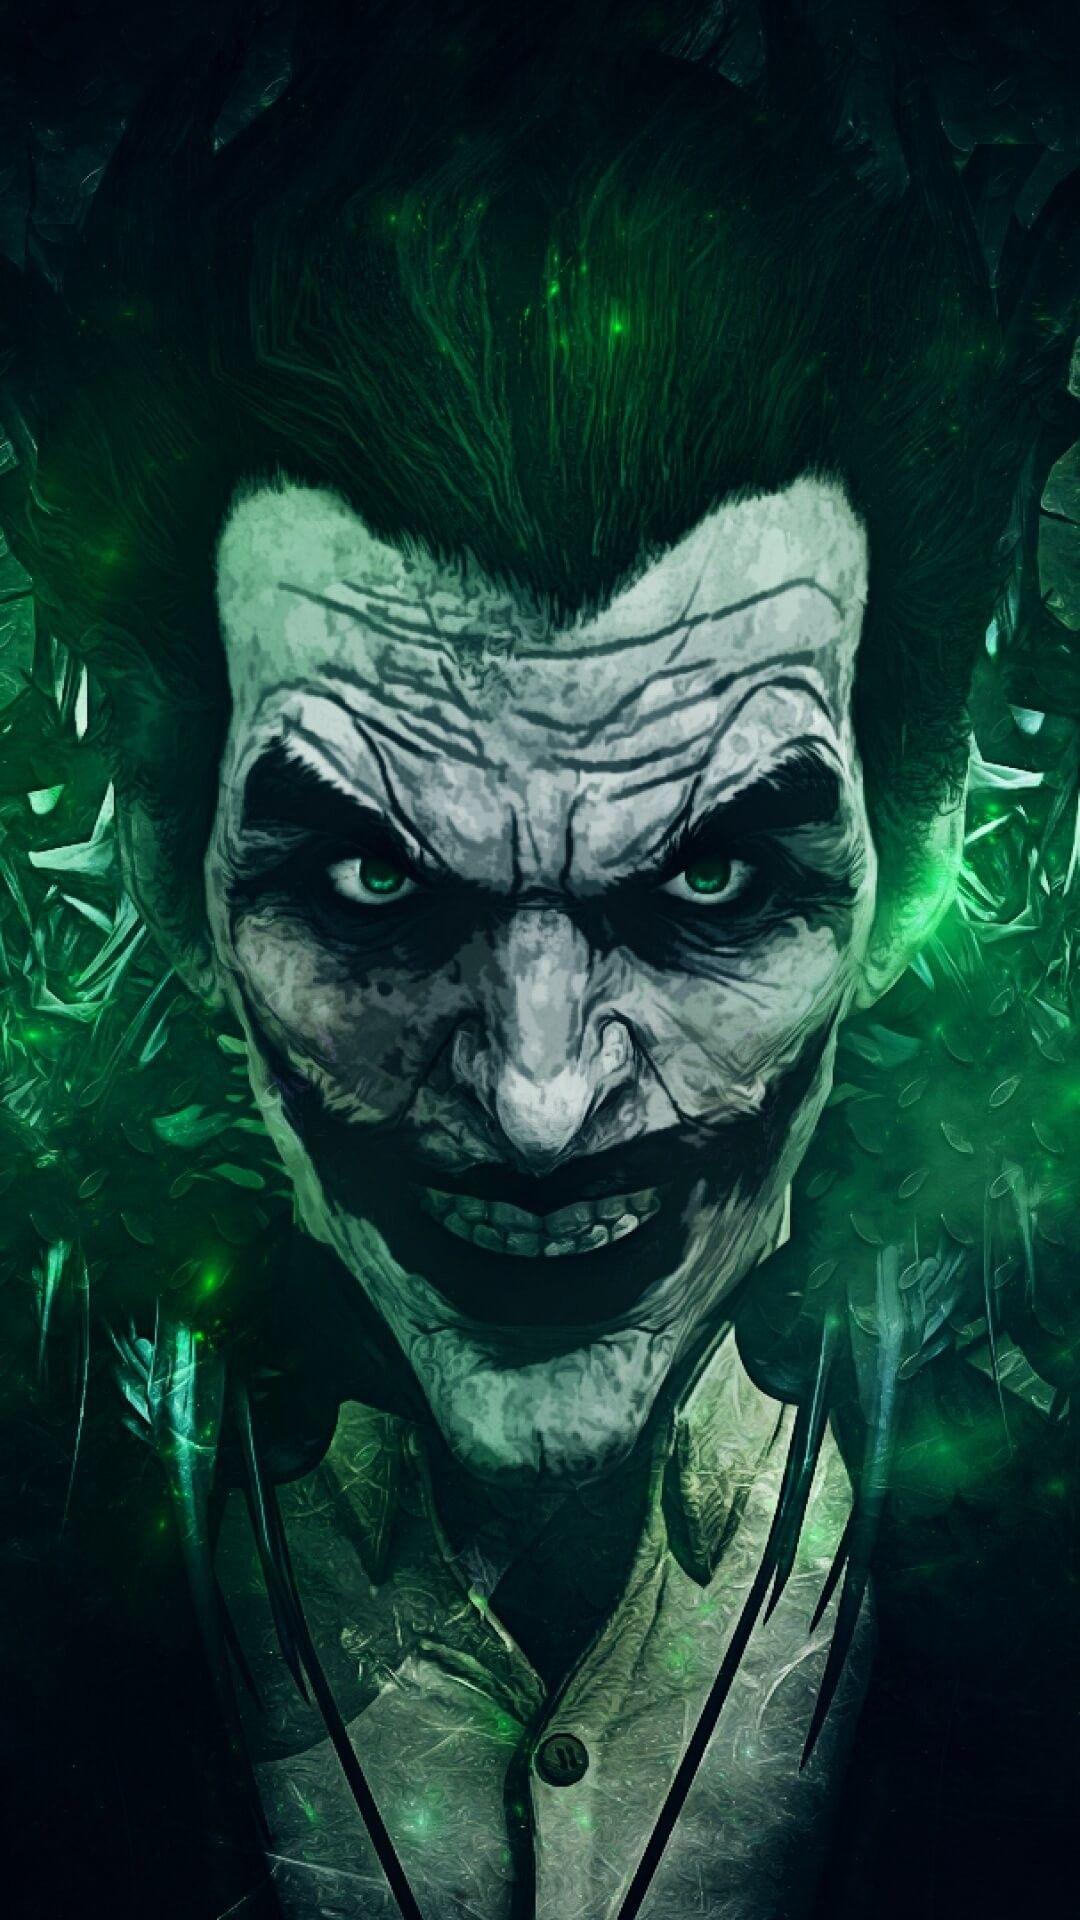 Cool Iphone Wallpaper Tumblr 454. Joker